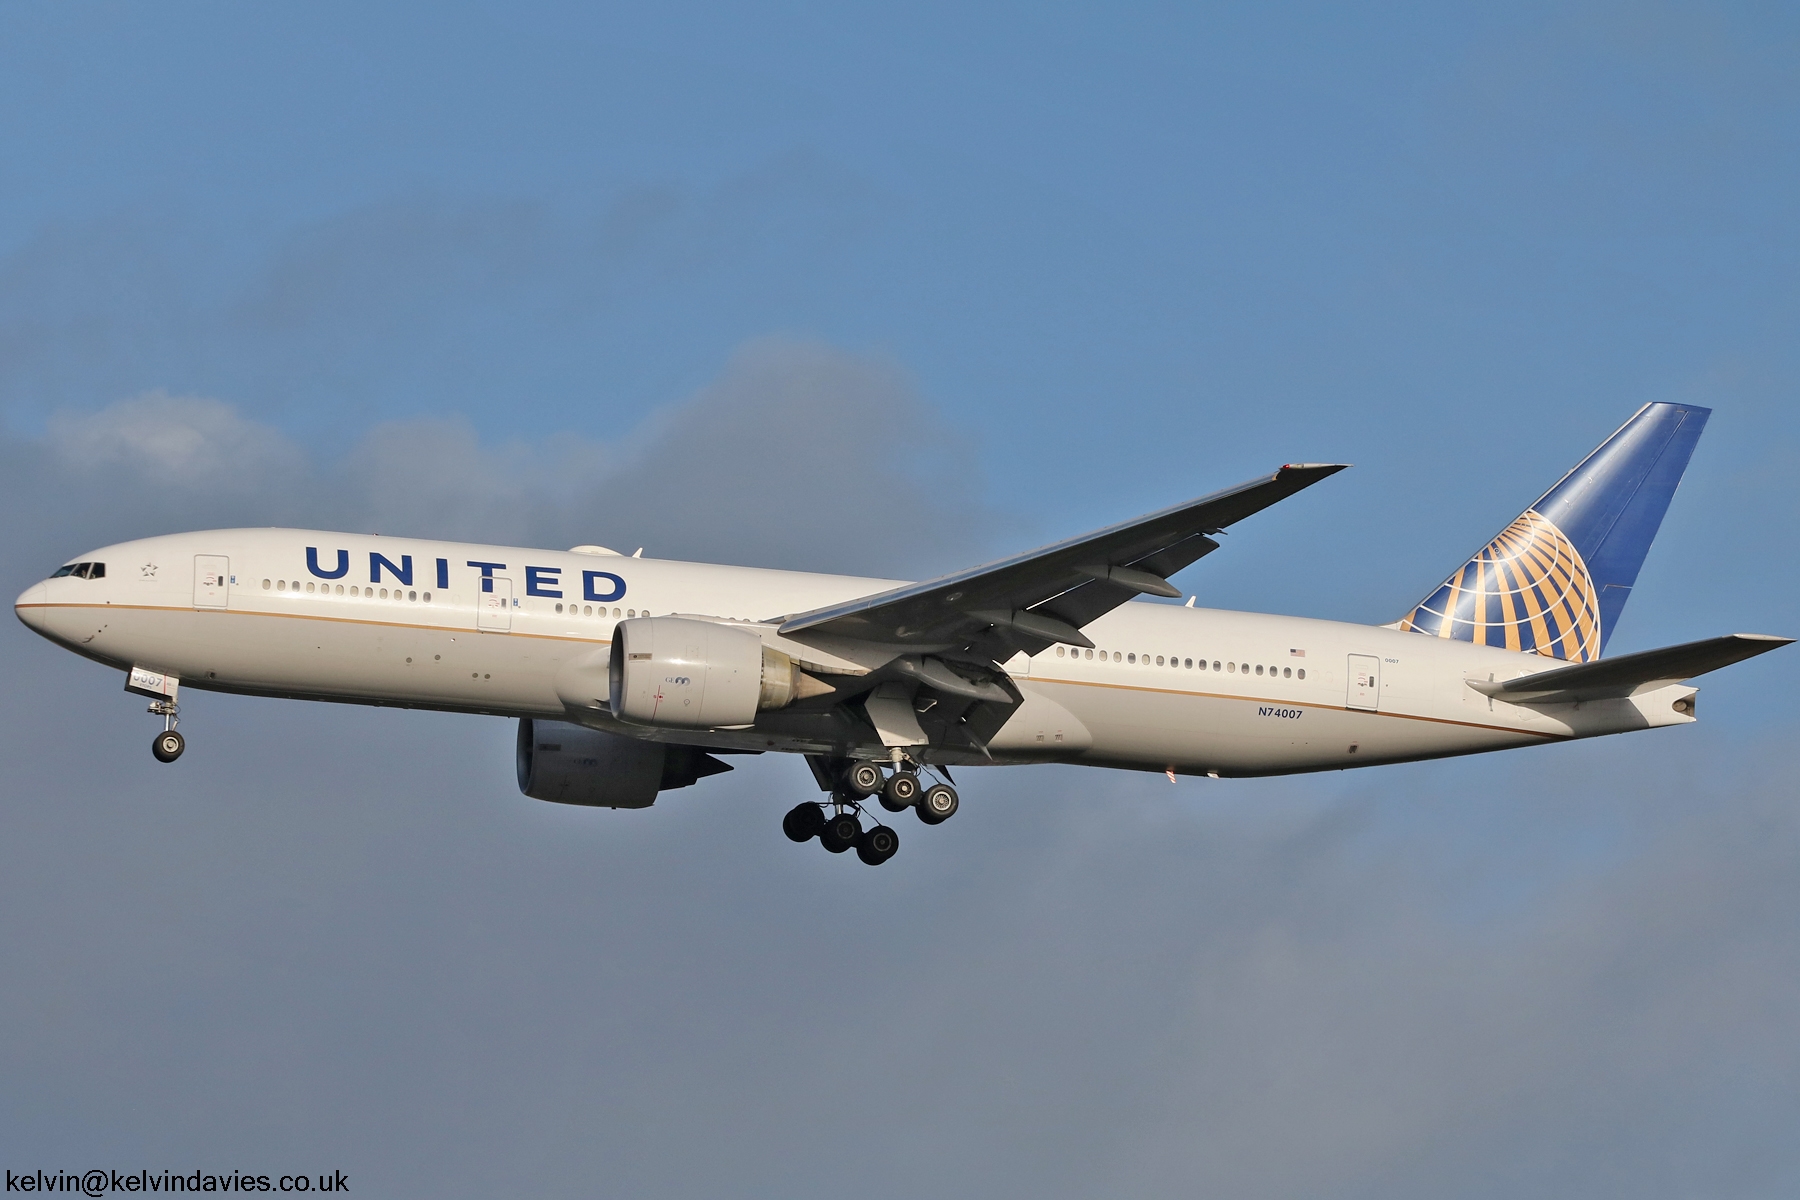 United Airlines 777 N74007